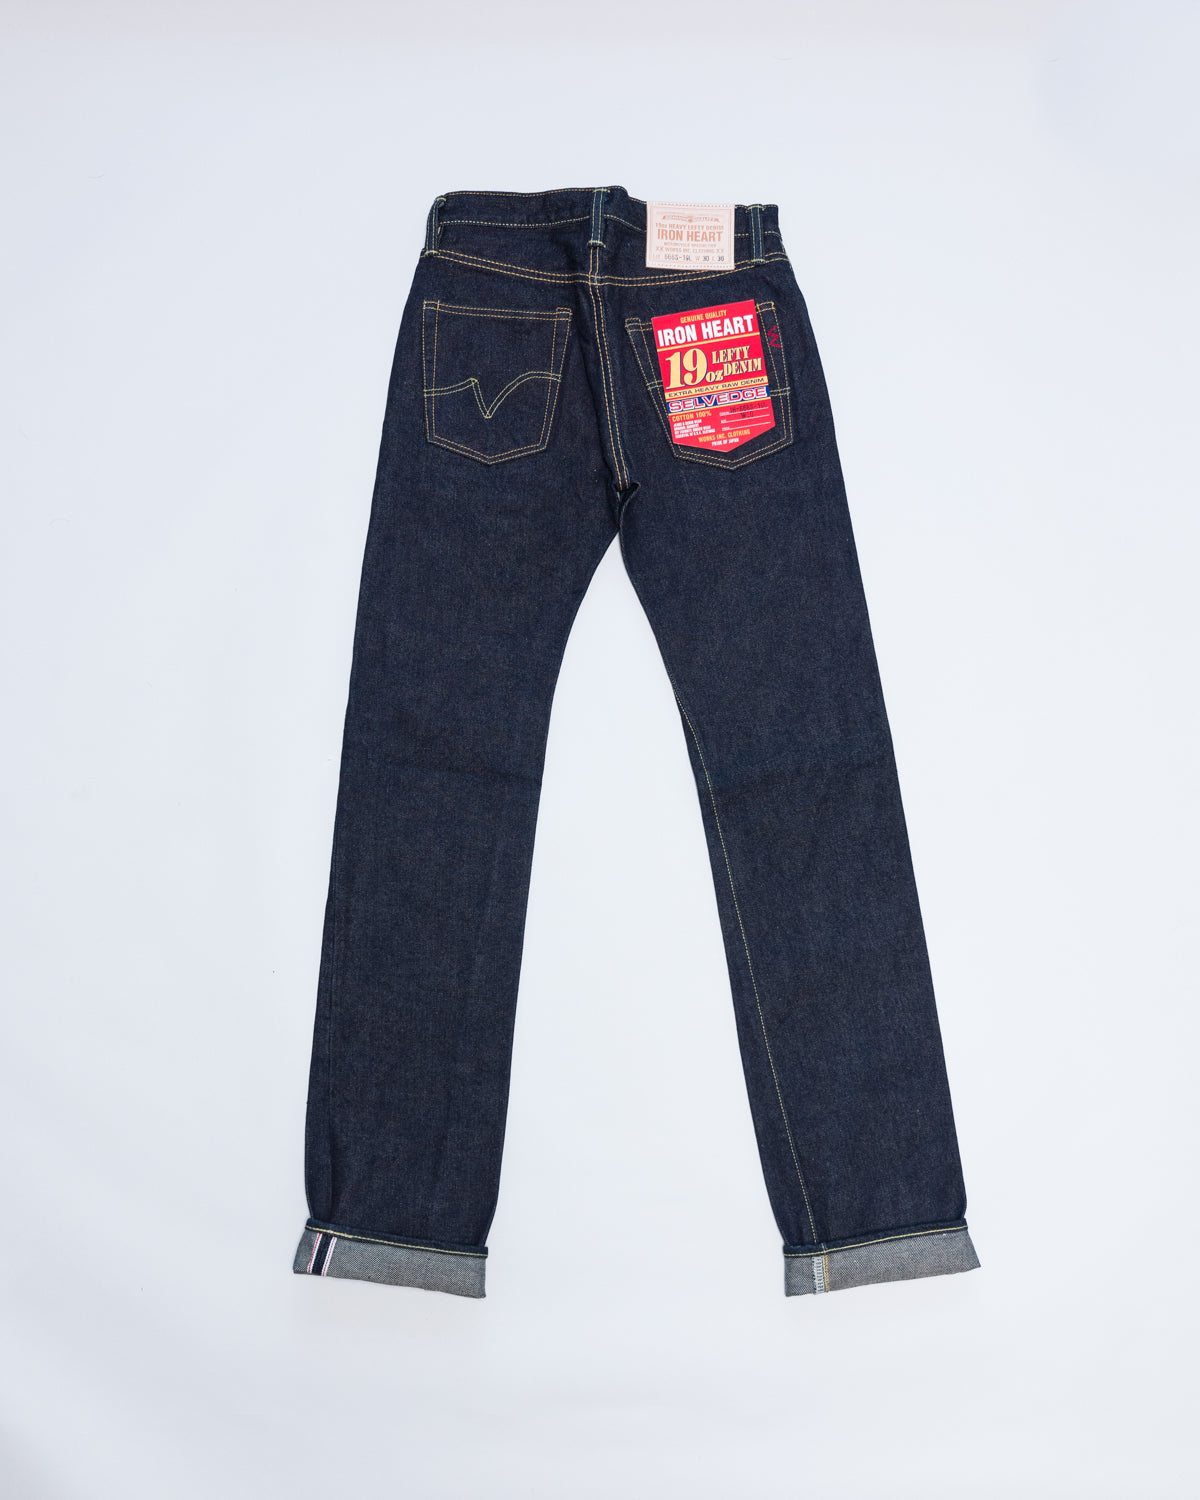 IH-666S-19L - 19oz Left Hand Twill Selvedge Denim Slim Straight Cut Jeans - Indigo